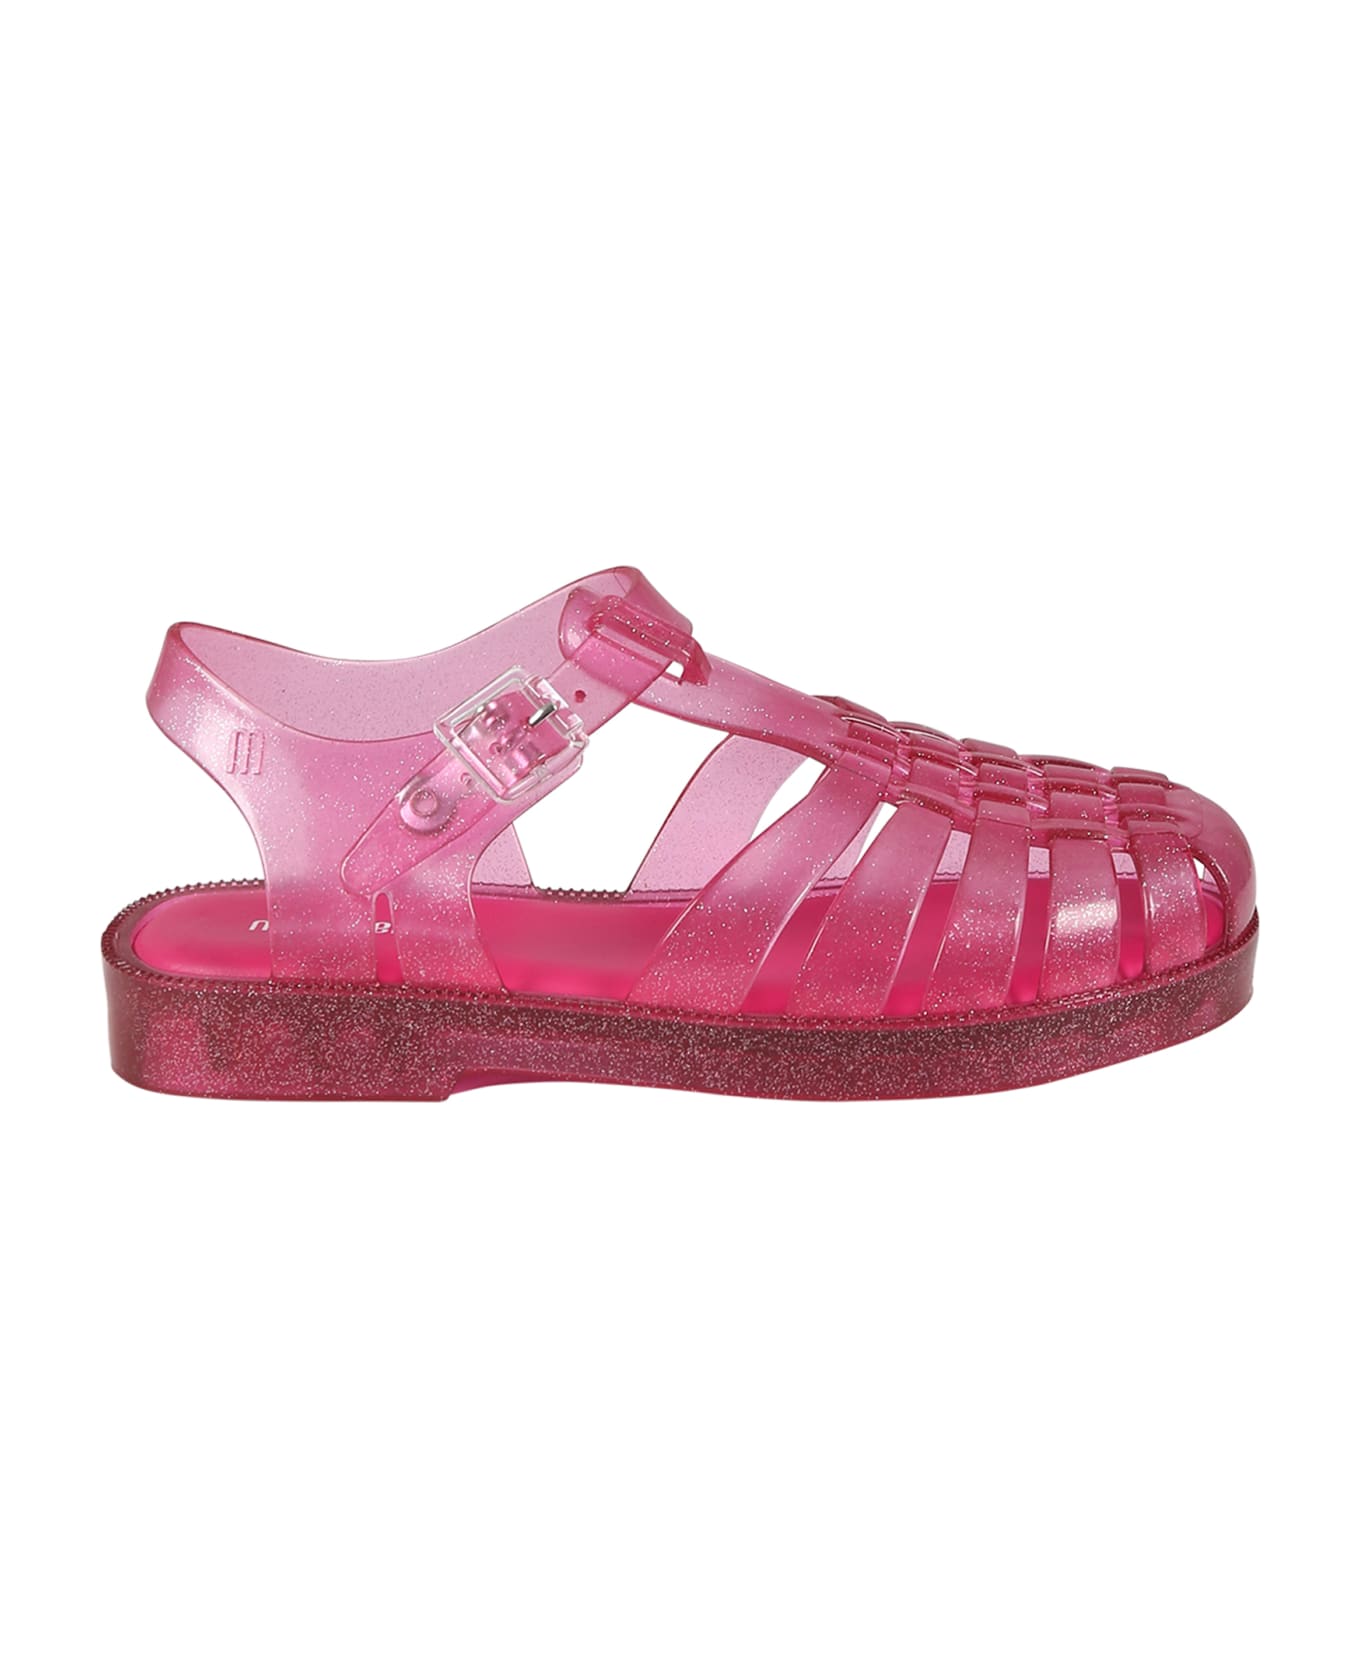 Melissa Fuchsia Sandals For Girl With Logo - Fuchsia シューズ